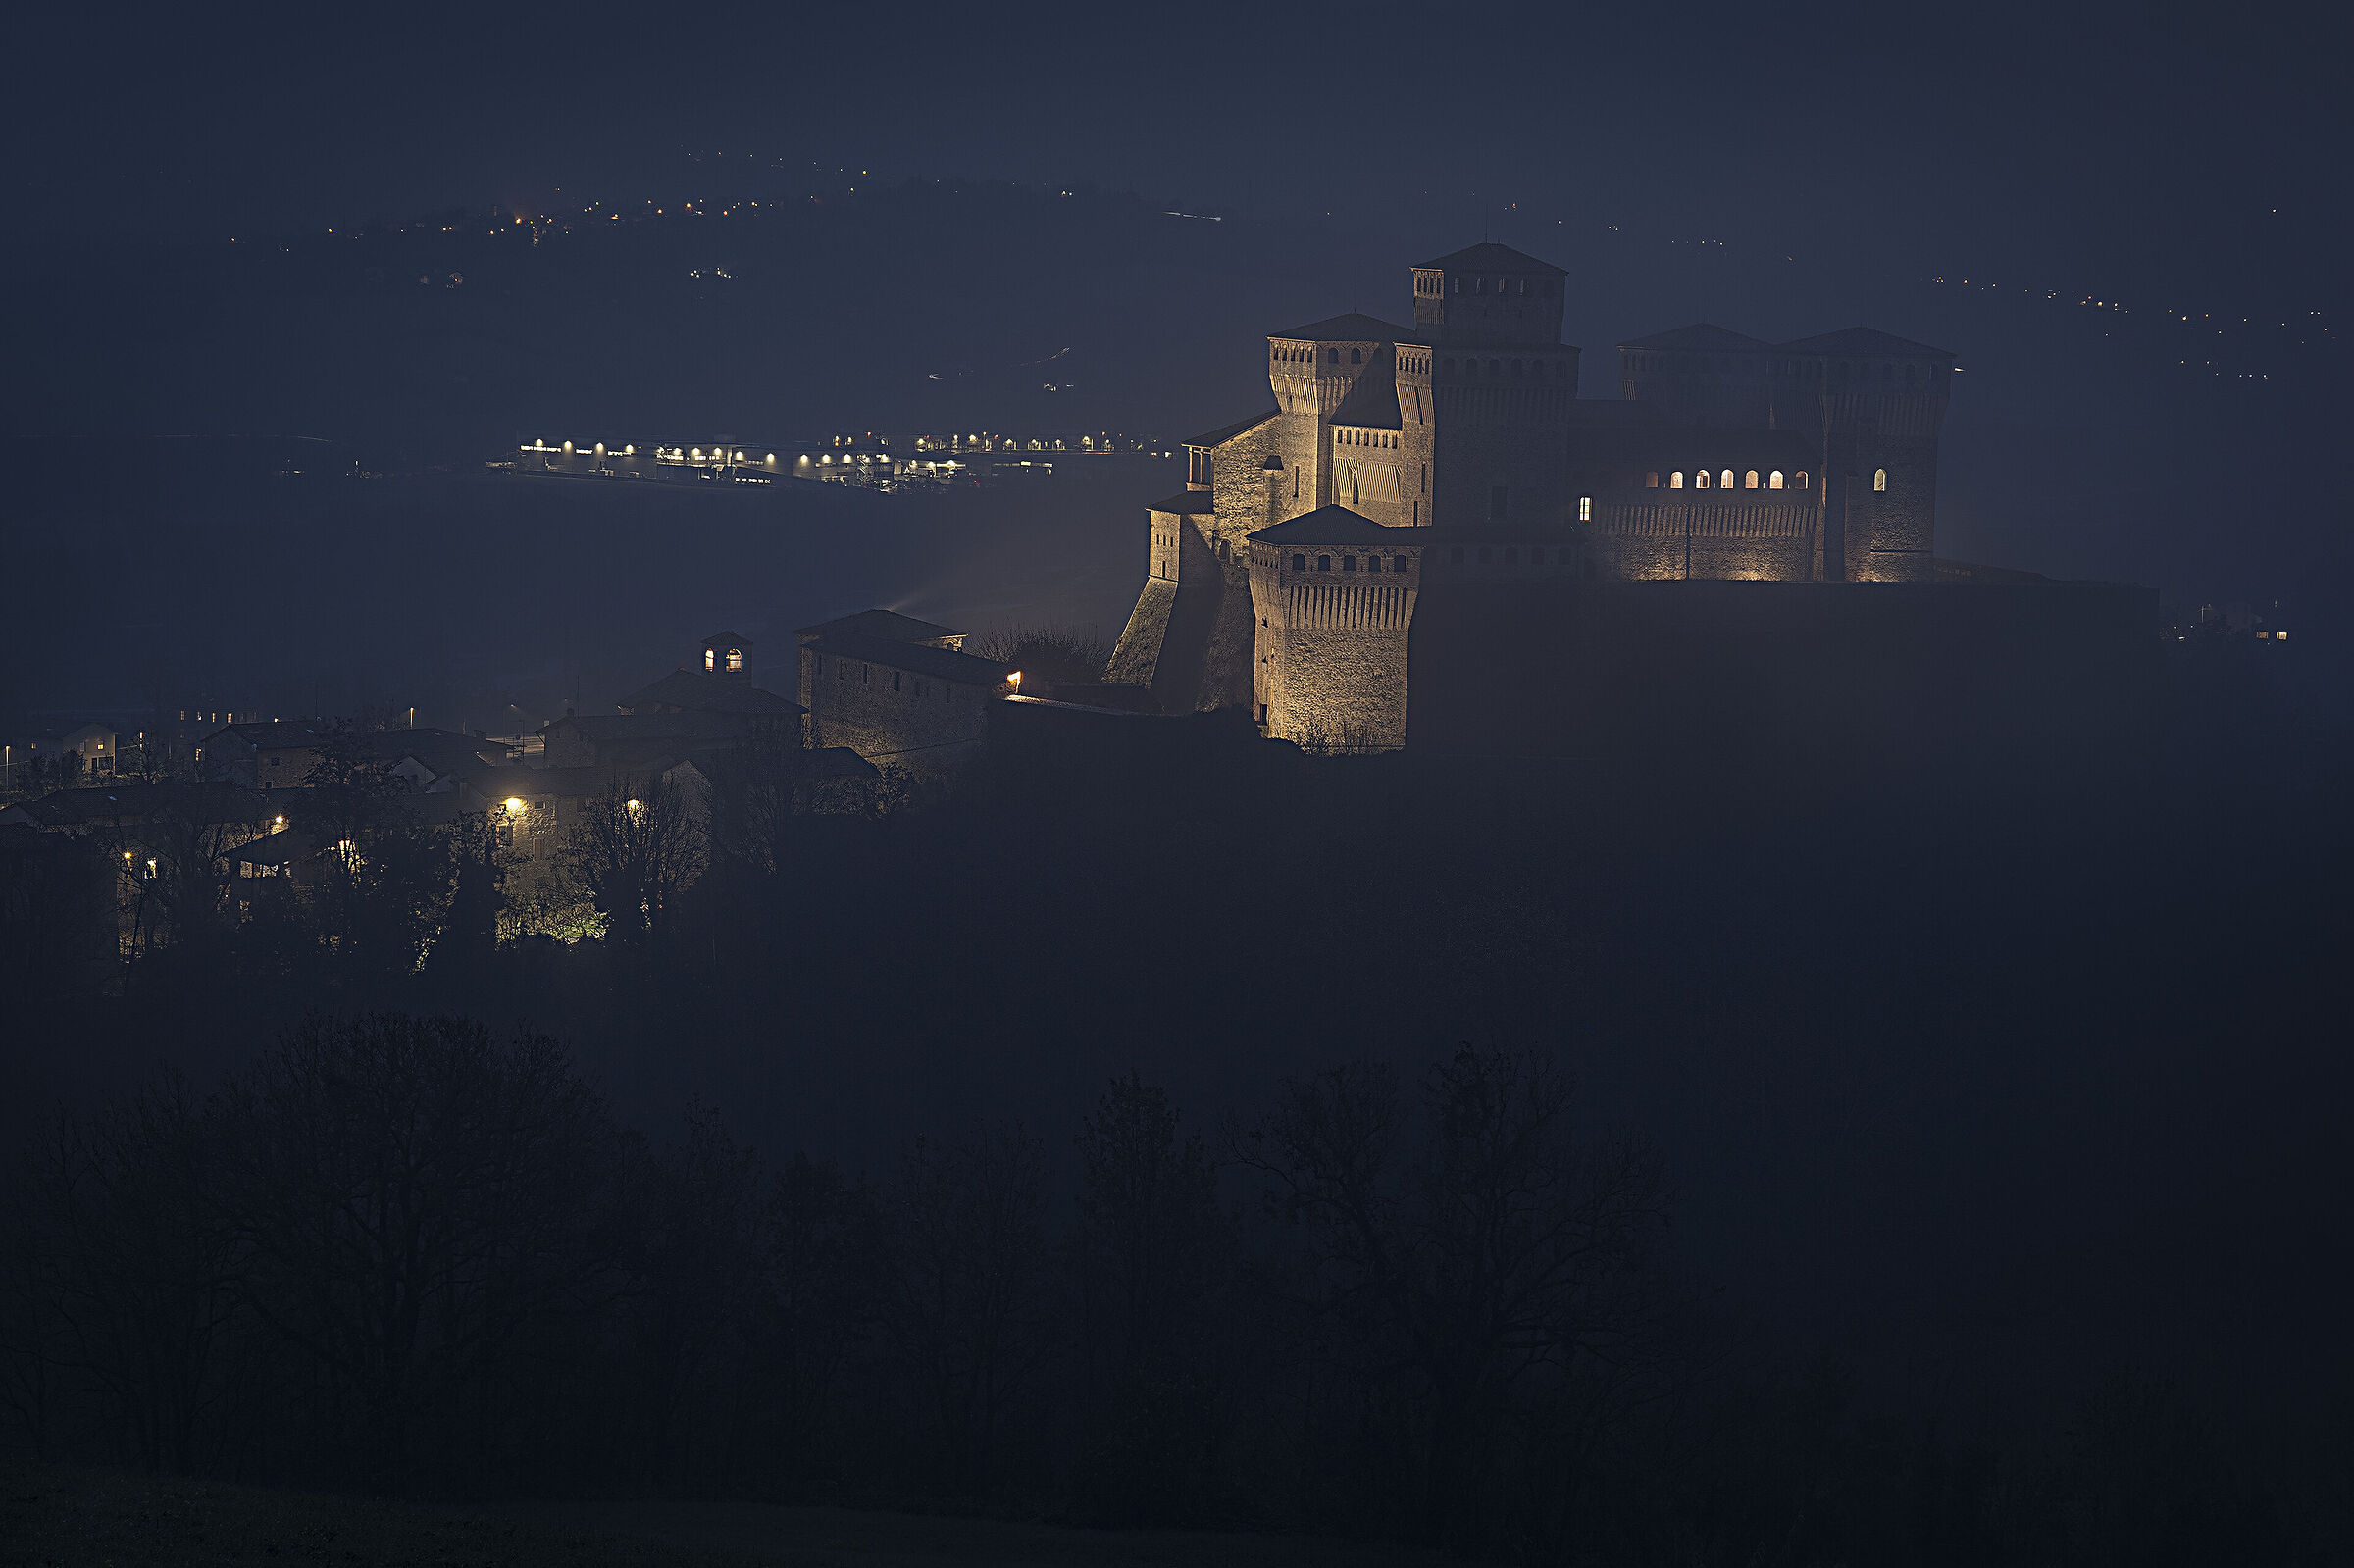 Castello di Torrechiara - Parma...